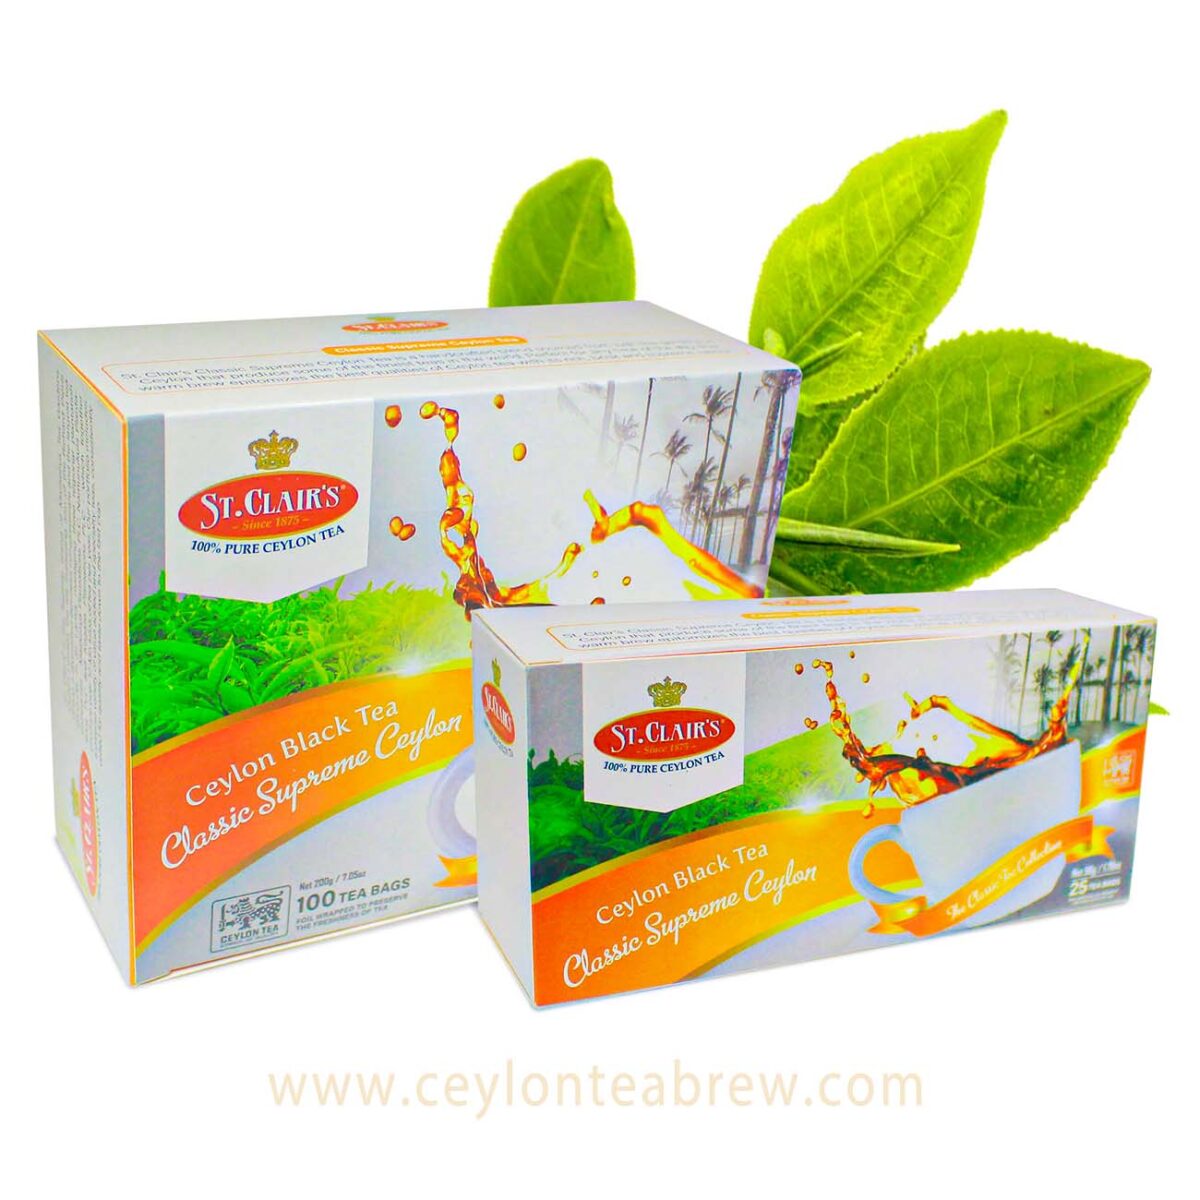 St. Clair's Ceylon black tea classic supreme tea bags